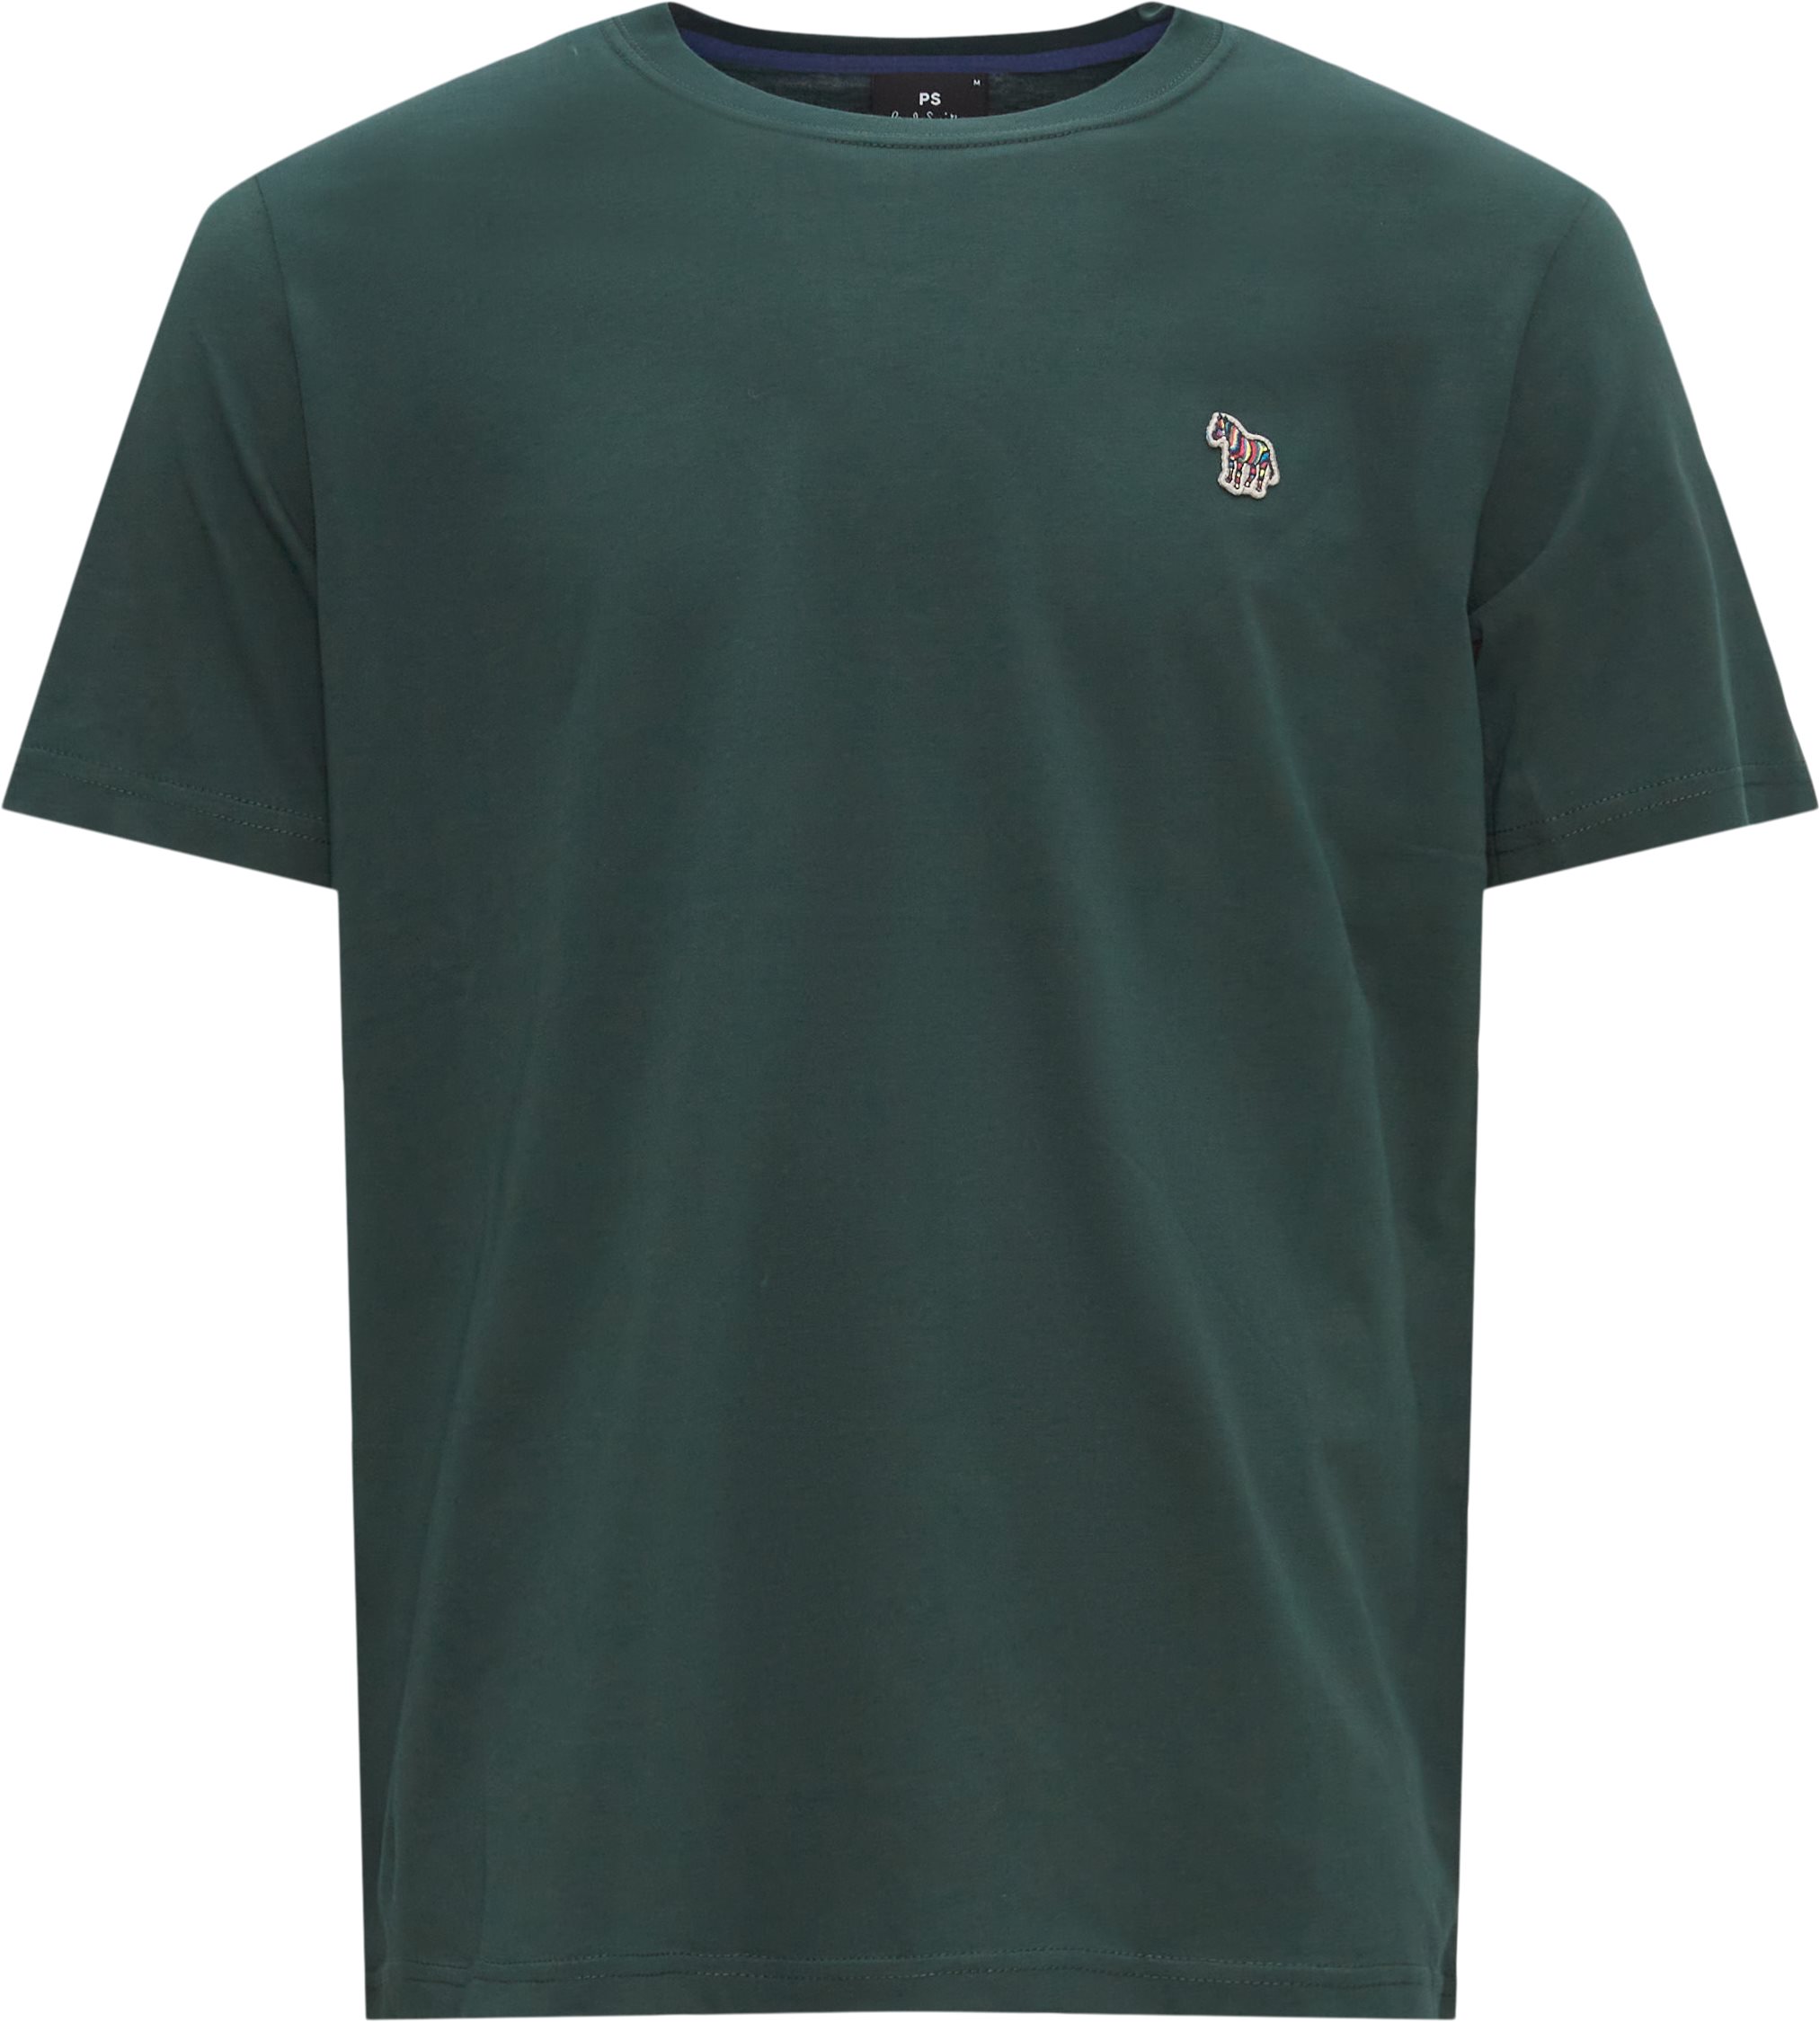 PS Paul Smith T-shirts 011RZ  J20064 Green